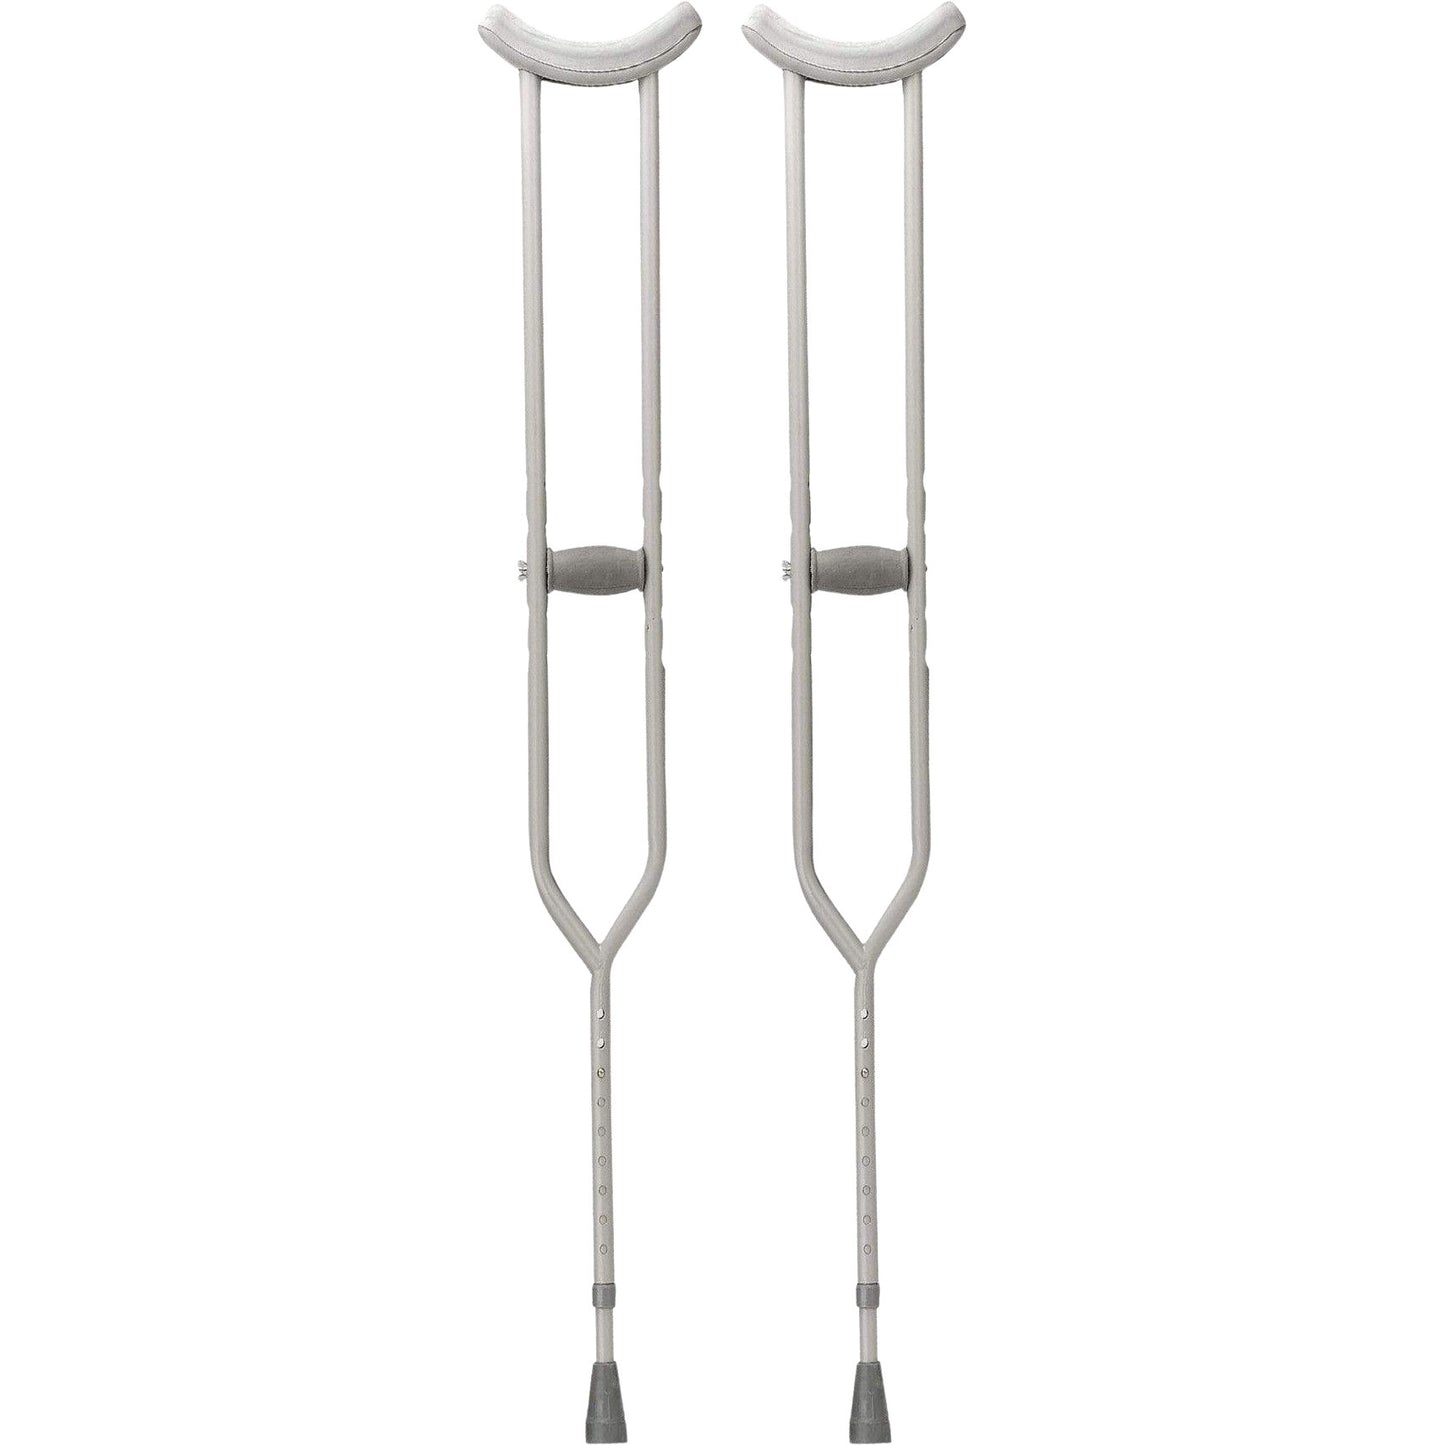 ConvaQuip Crutches Bariatric Underarm Crutch Model DR10408 by ConvaQuip